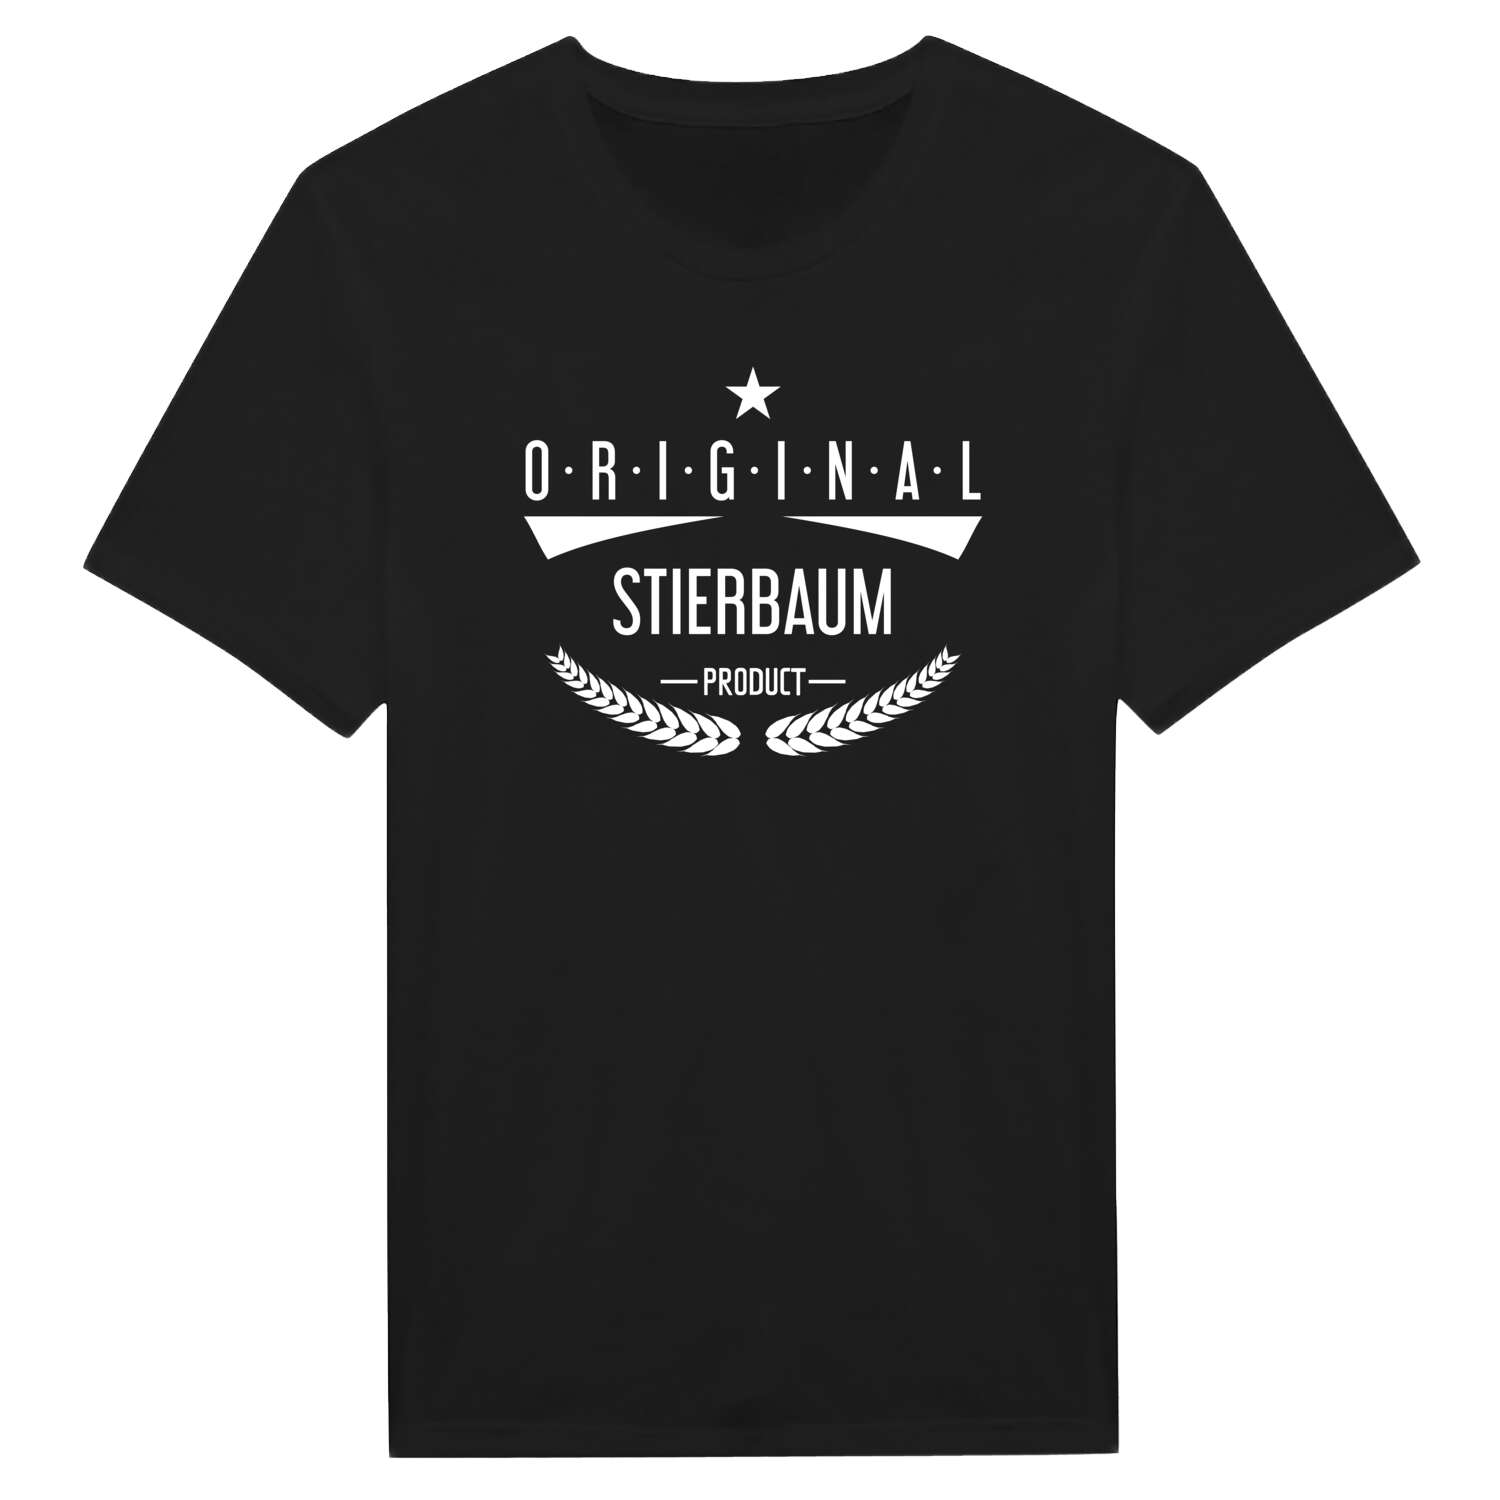 Stierbaum T-Shirt »Original Product«